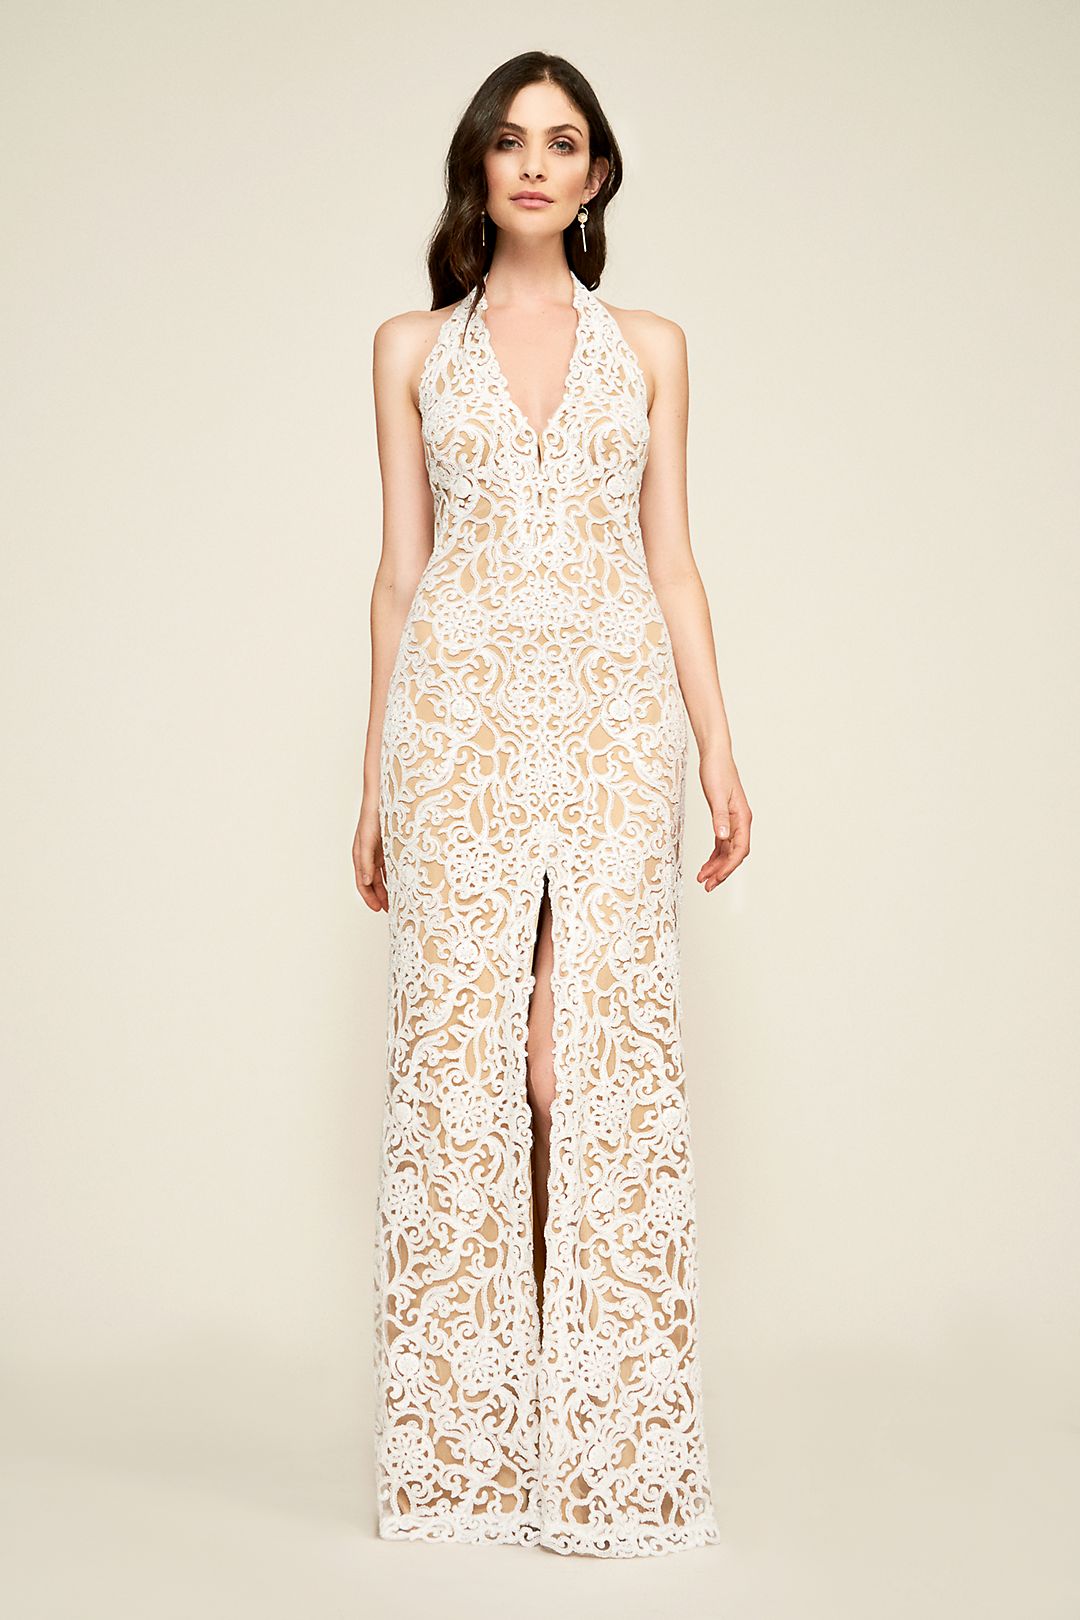 Elanor Sequin Embroidered Halter Wedding Dress Image 1